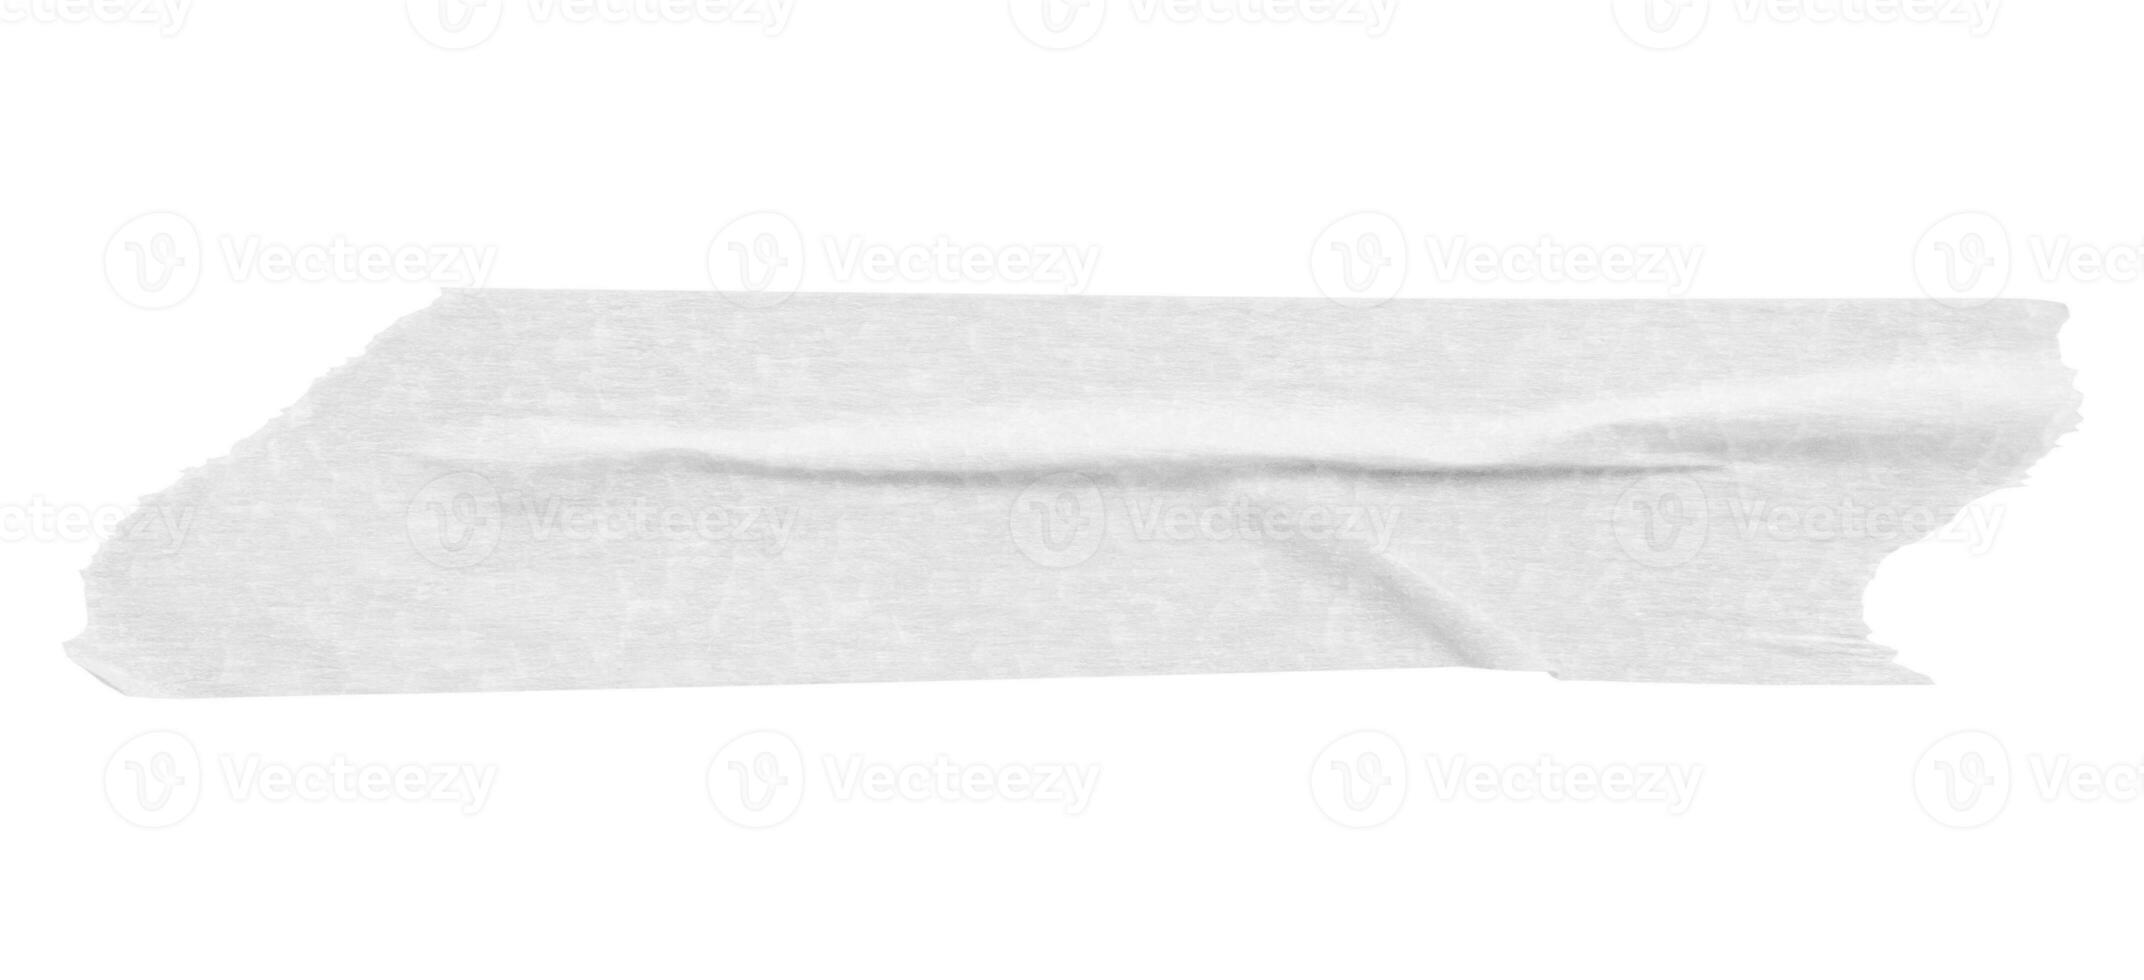 branco adesivo papel fita isolado em branco fundo foto